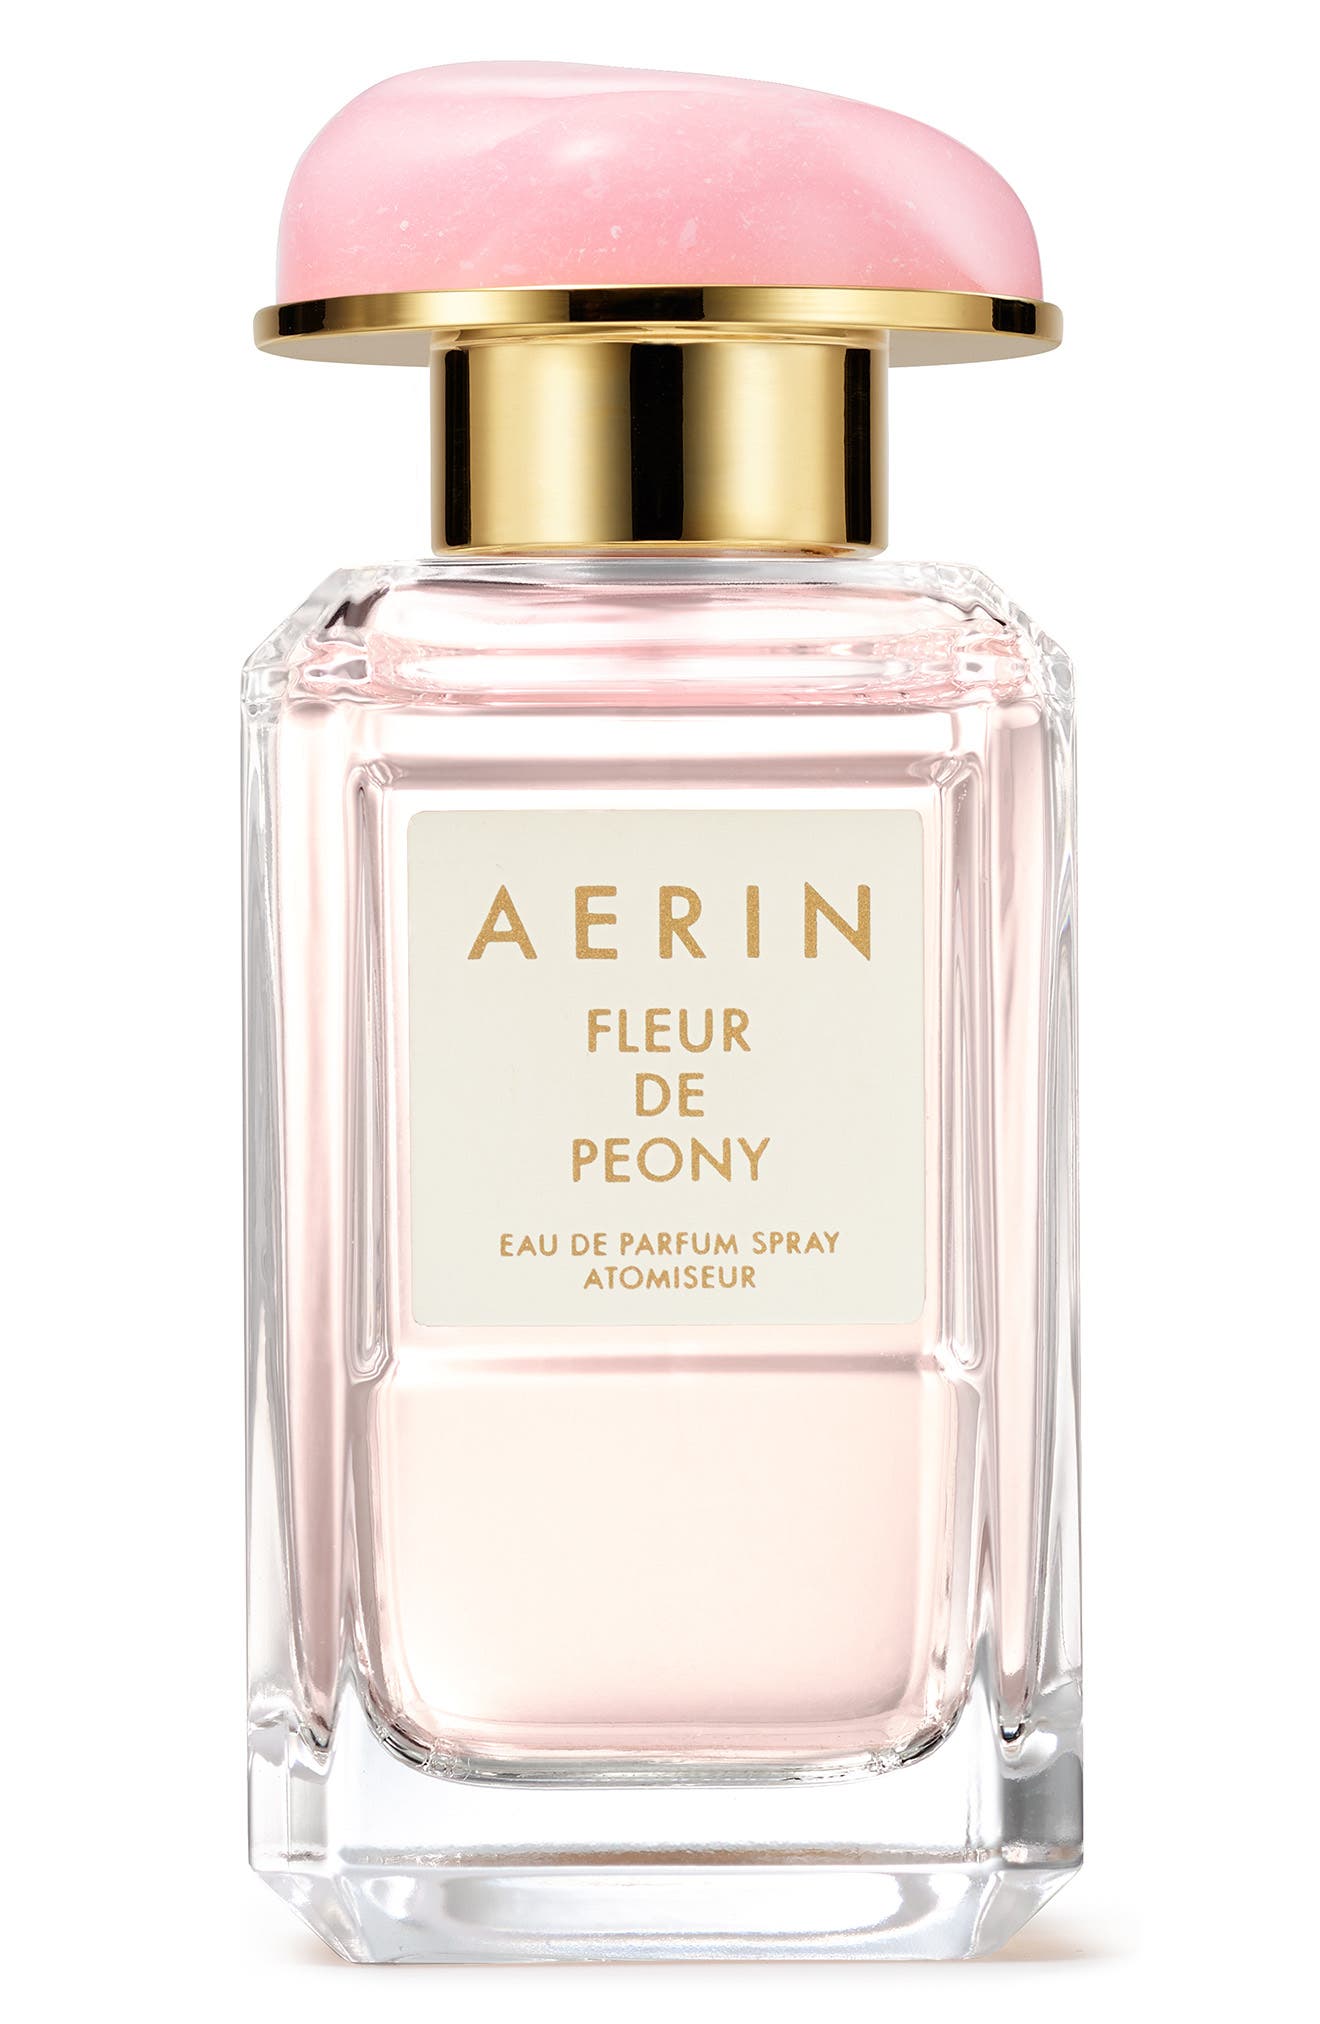 AERIN Fleur de Peony Eau de Parfum Spray 3.4 oz